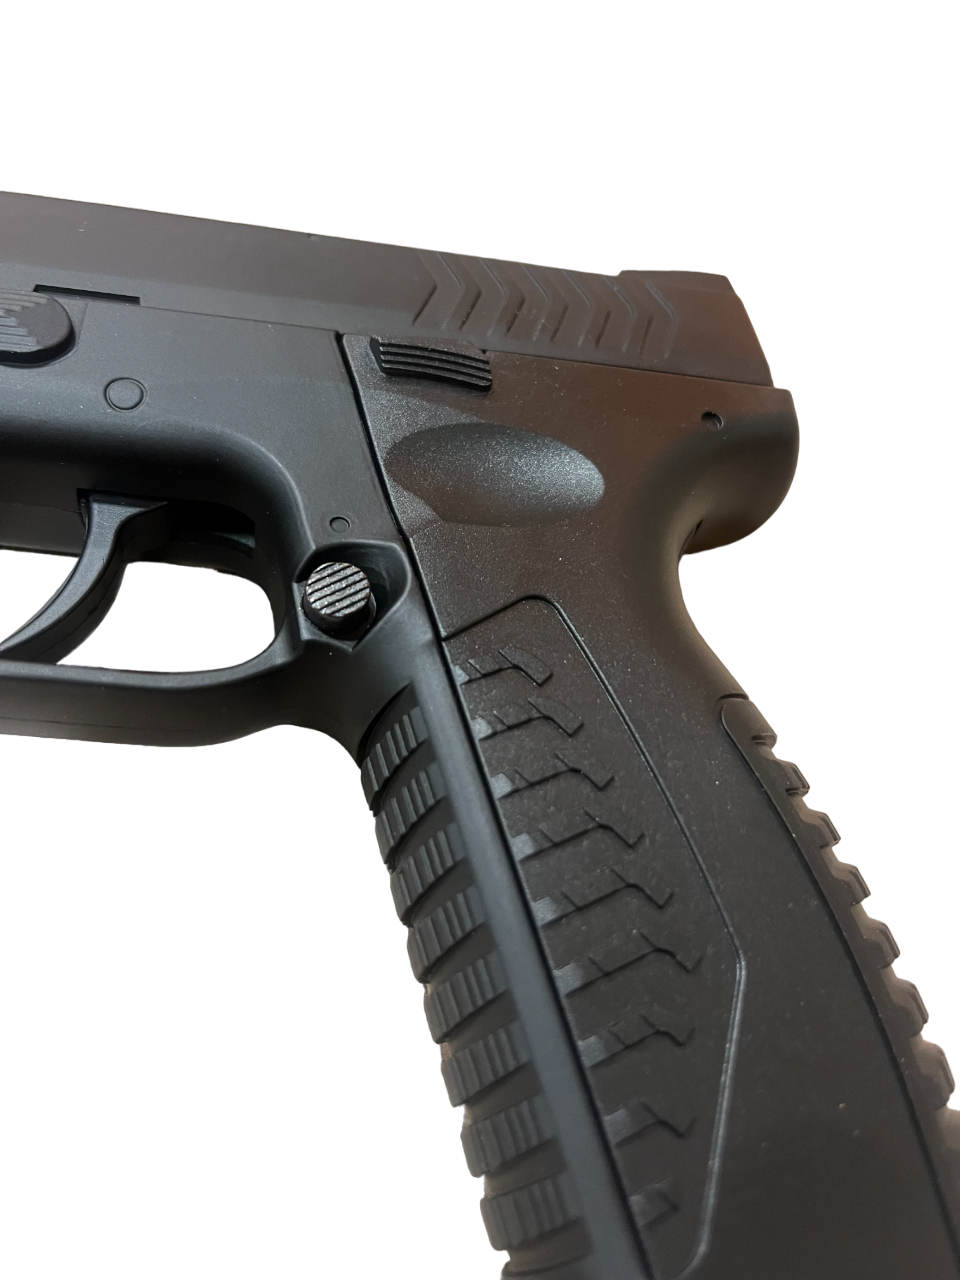 Hwasan XDM Co2 Pistol (4.5mm – Black)